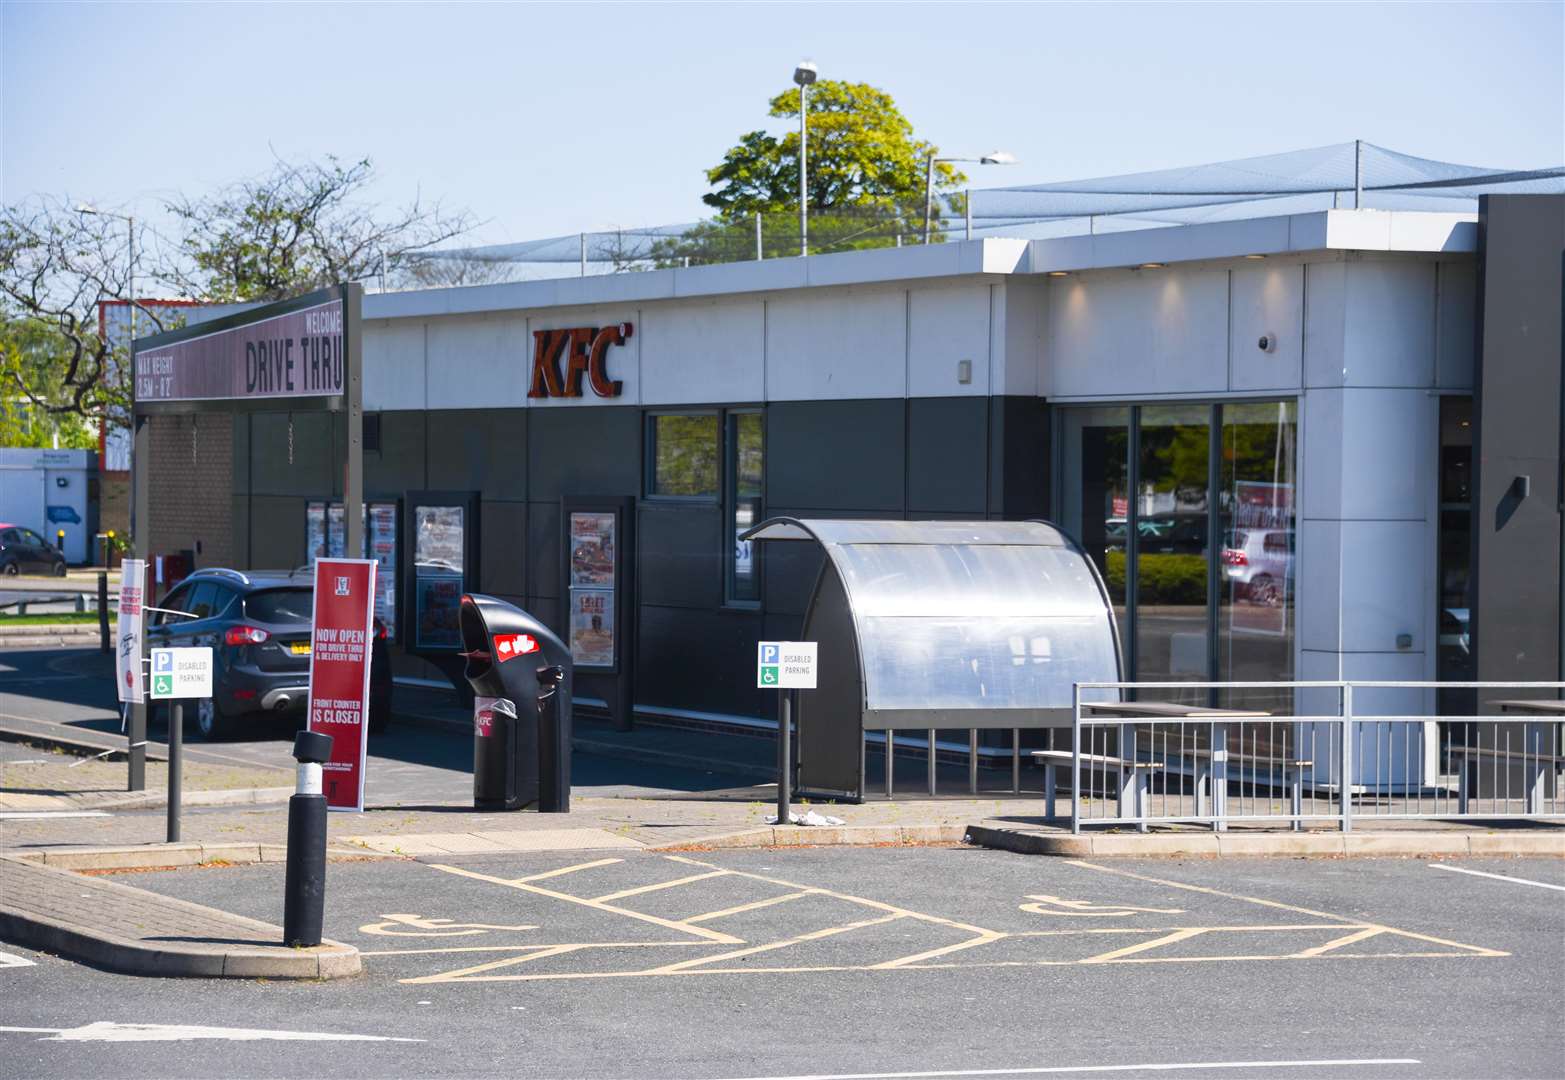 A KFC drive-thru has been billed as being behind the bid